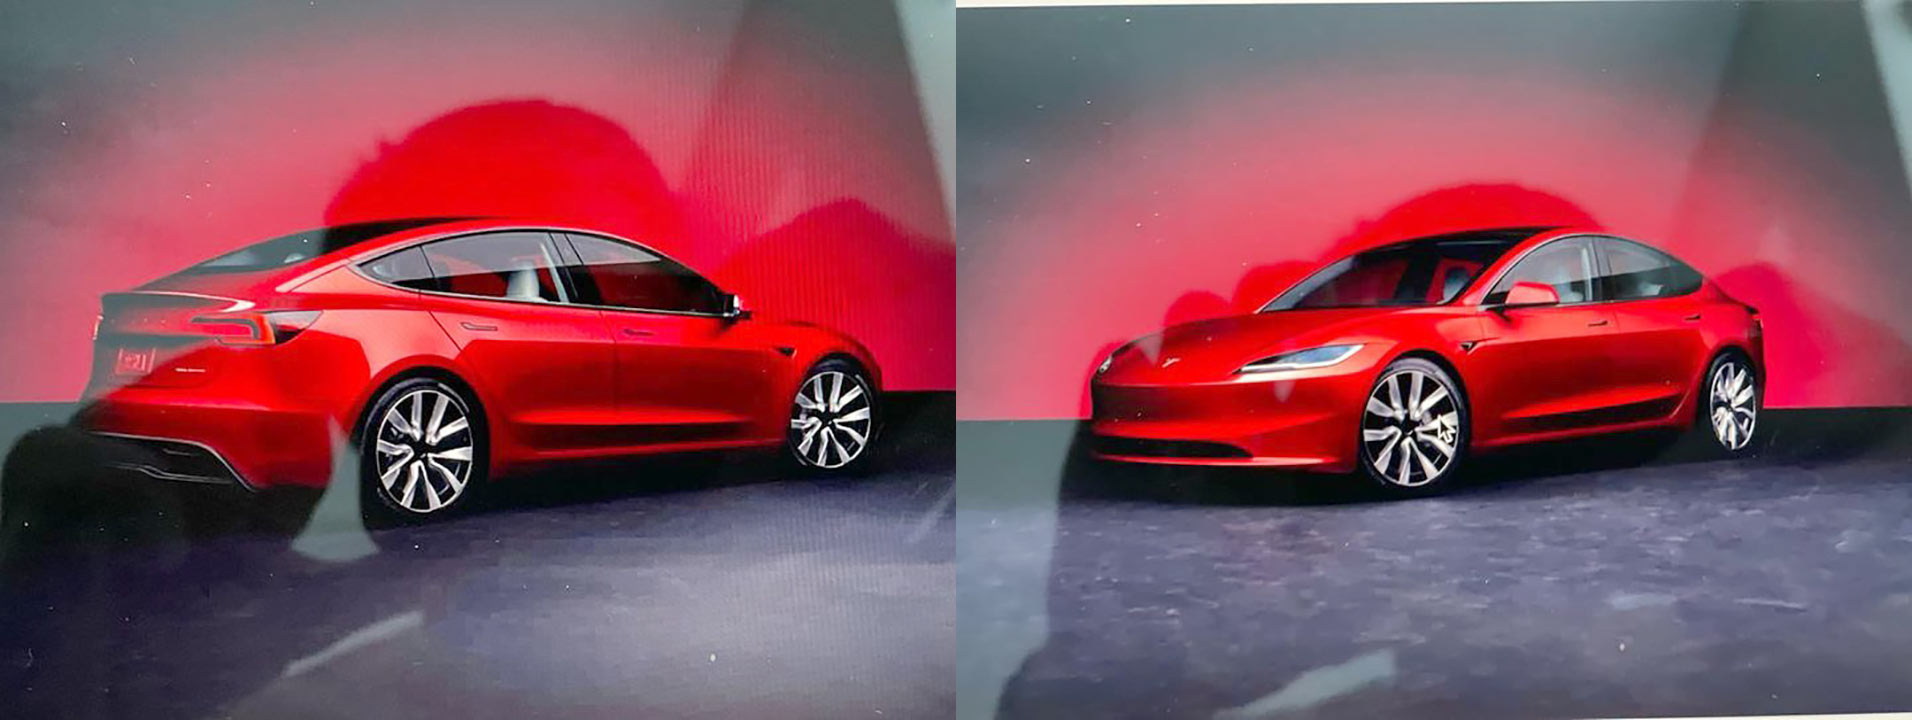 Rumors suggest Tesla plans to reveal Project Highland Tesla Model